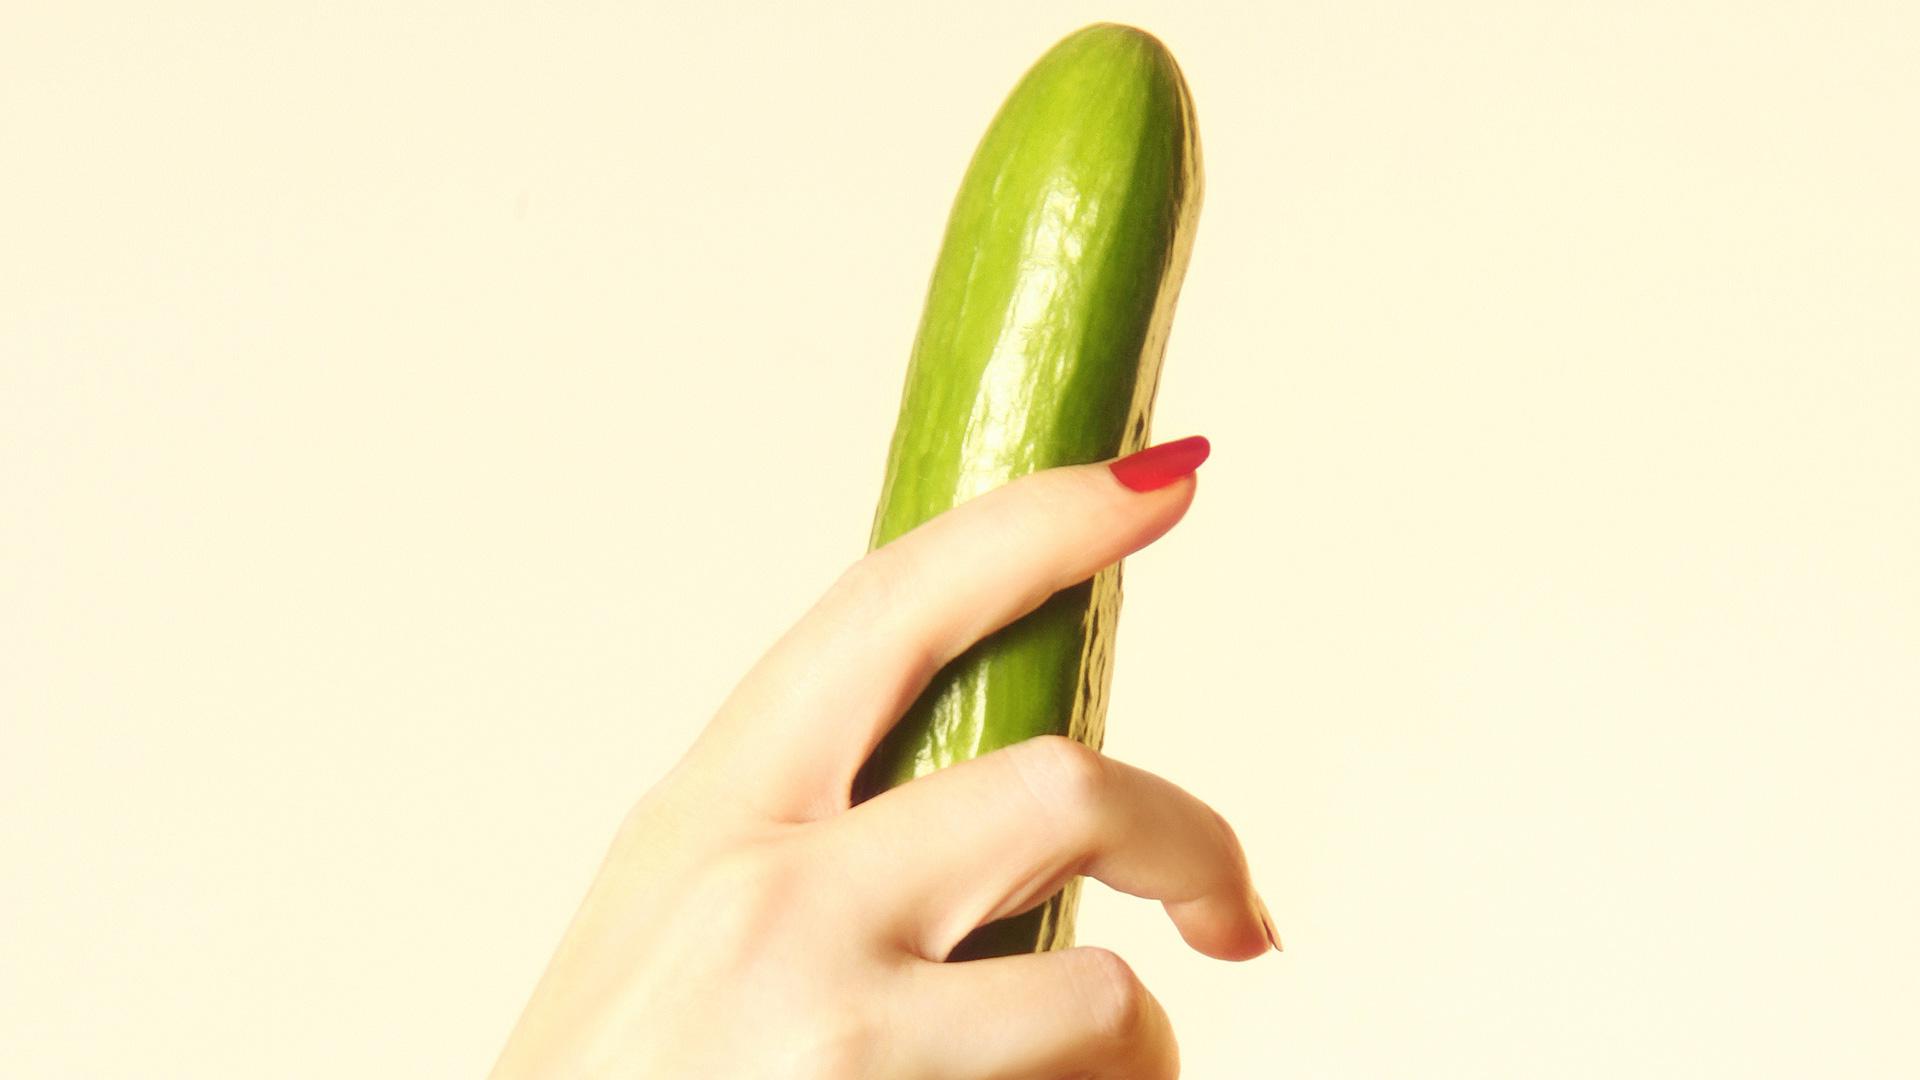 Should you use a cucumber as a dildo? | Pulse Nigeria